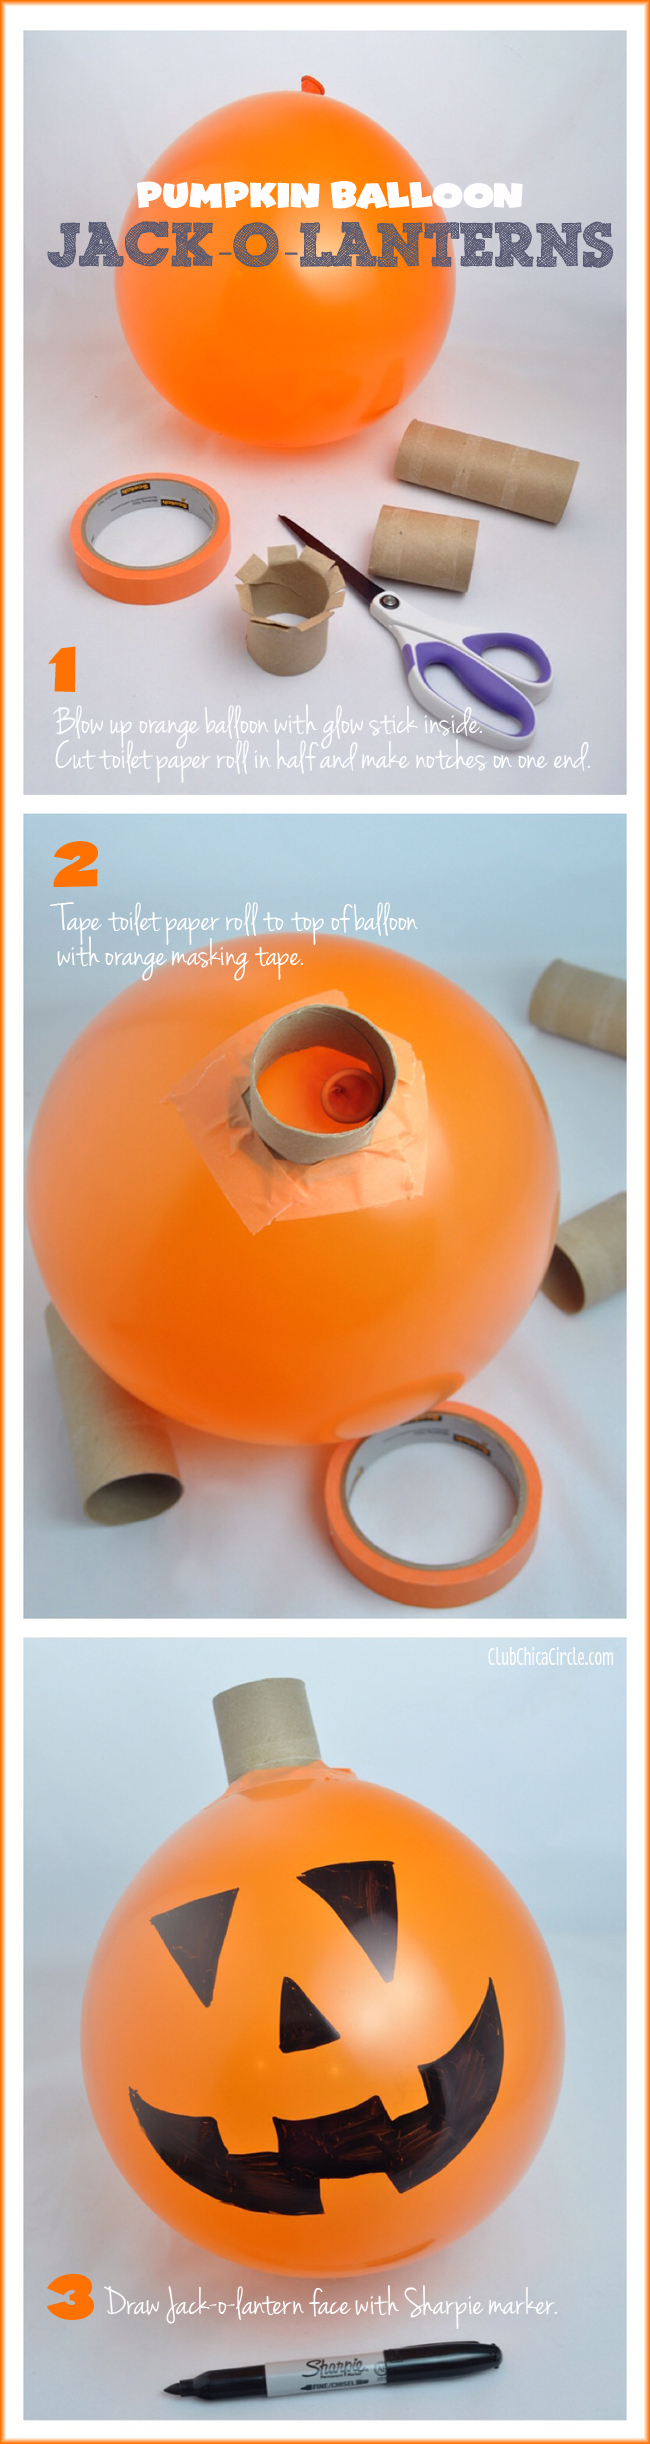 Pumpkin Balloon Halloween Party Craft Idea DIY